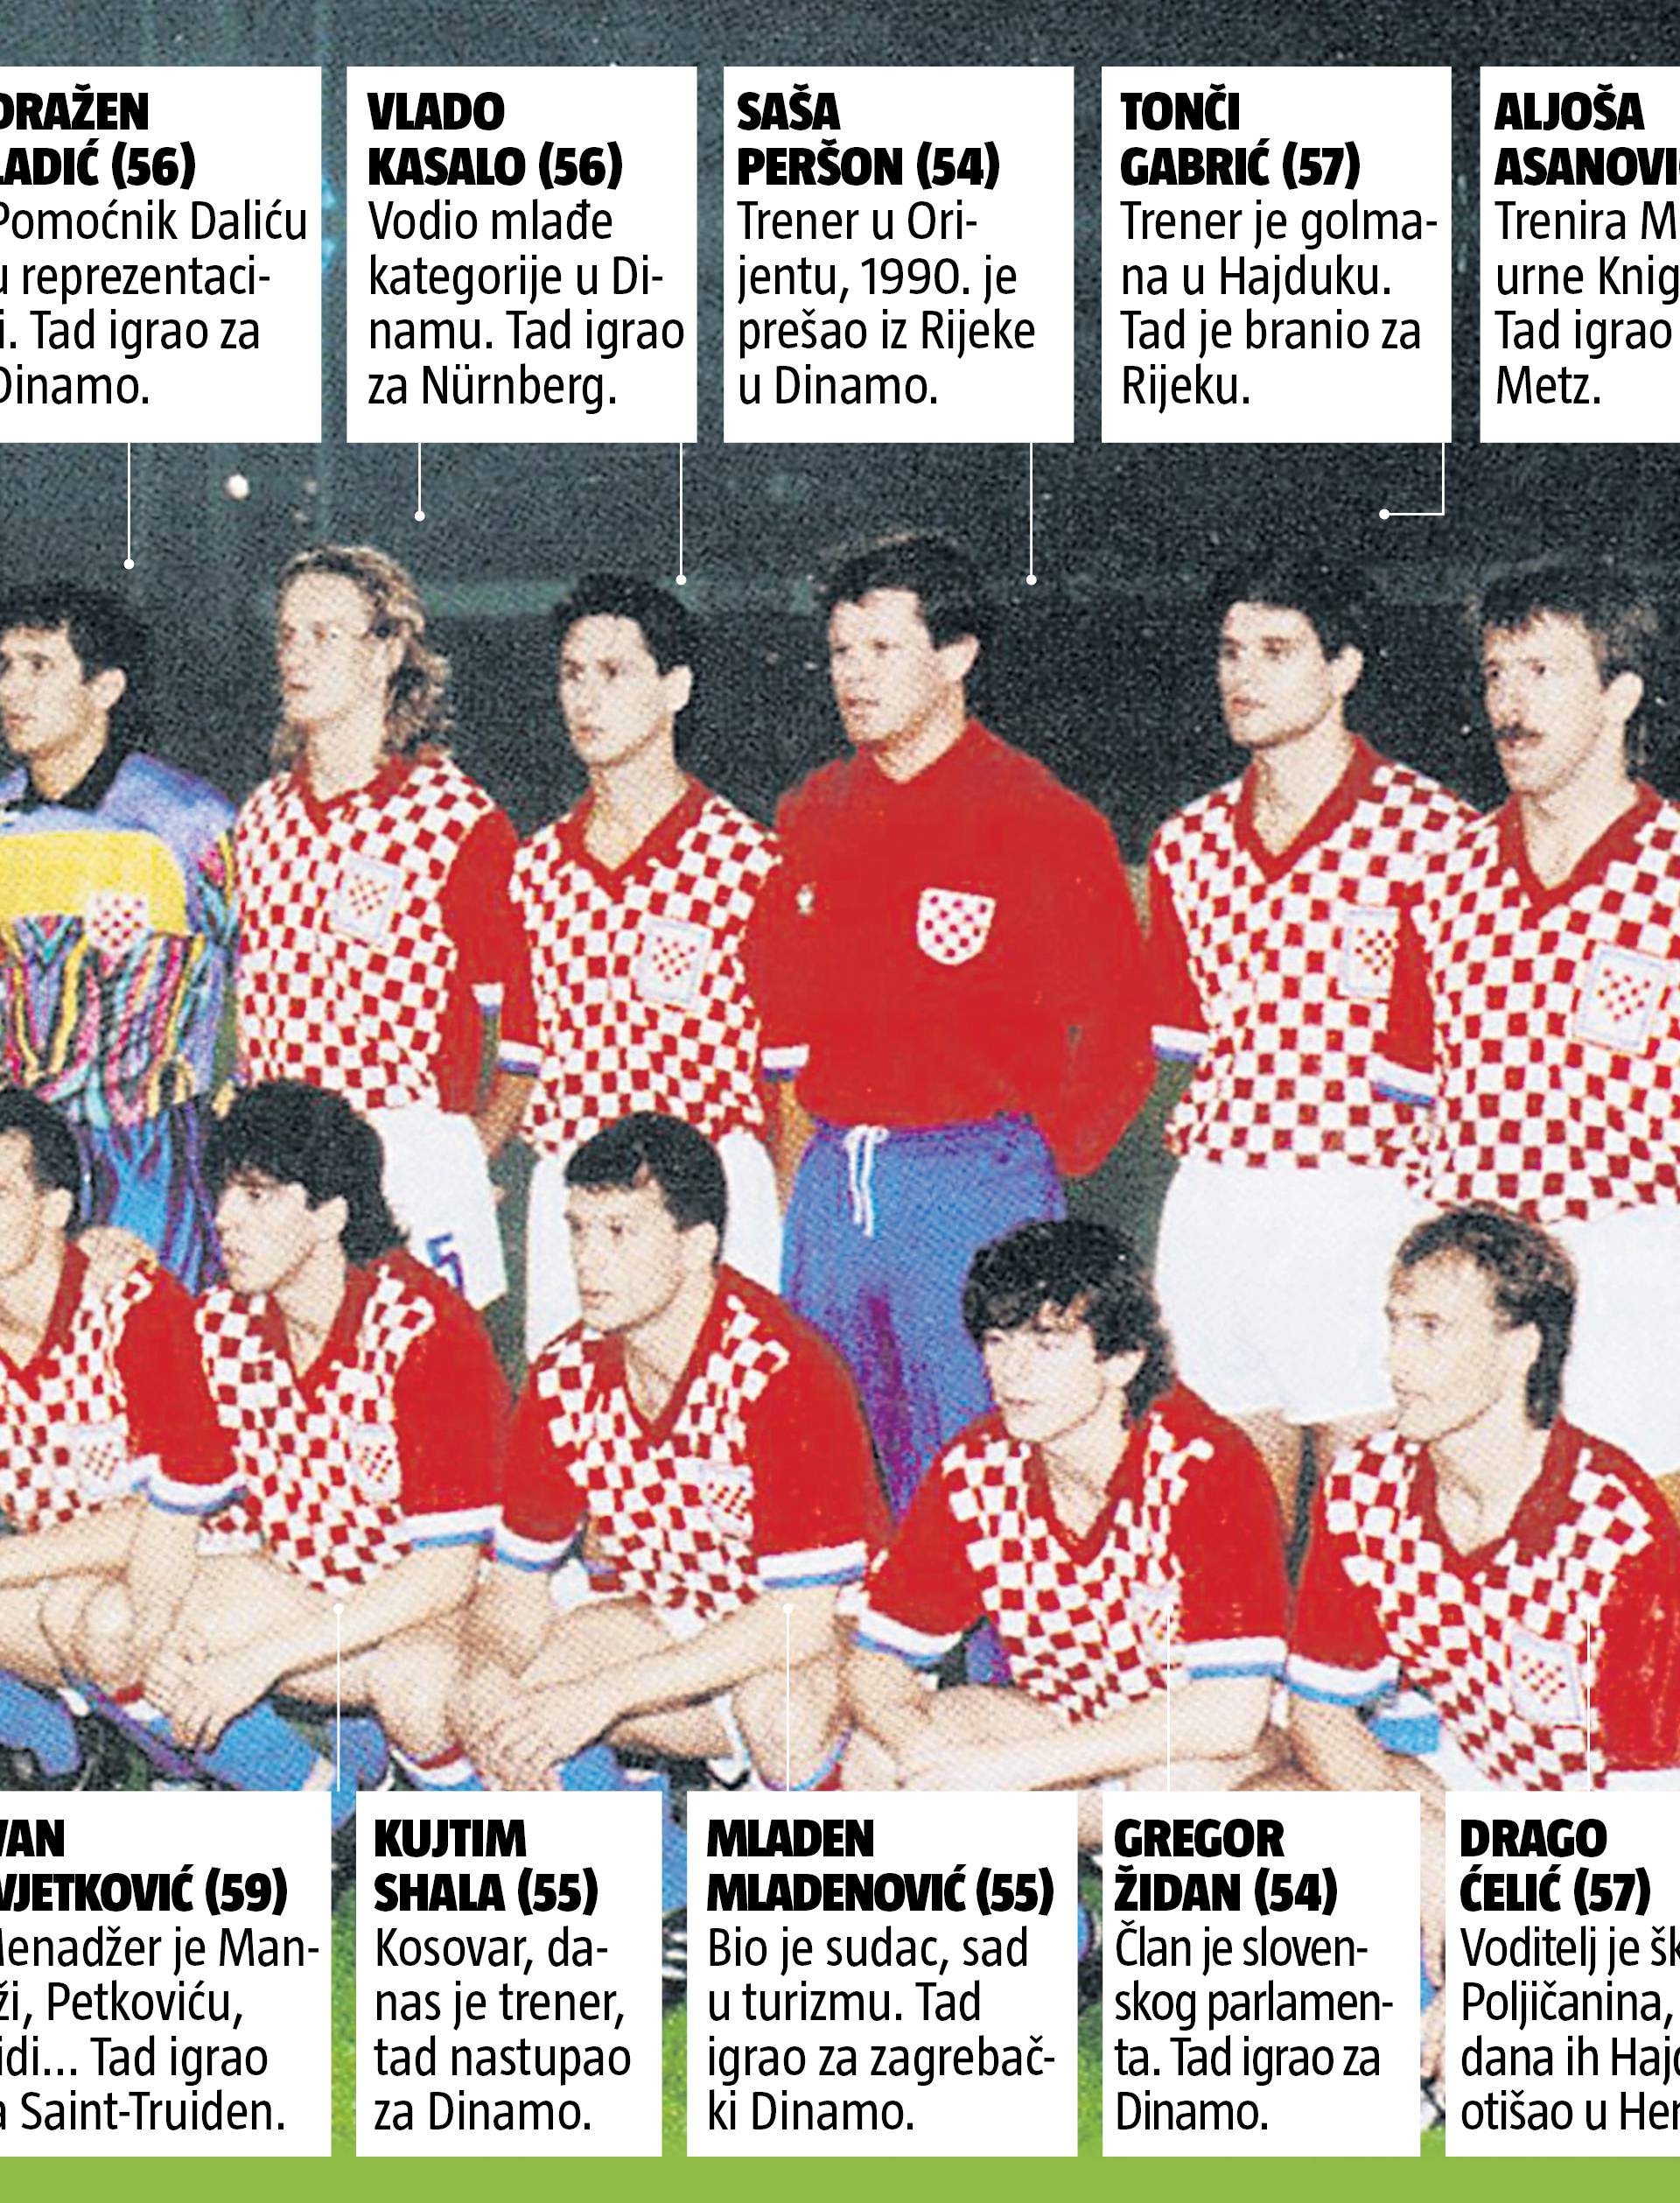 Zlatko Kranjčar dva puta je bio blizu Poljuda: Uh, Hajduk bi za mene bio stvarno veliki izazov